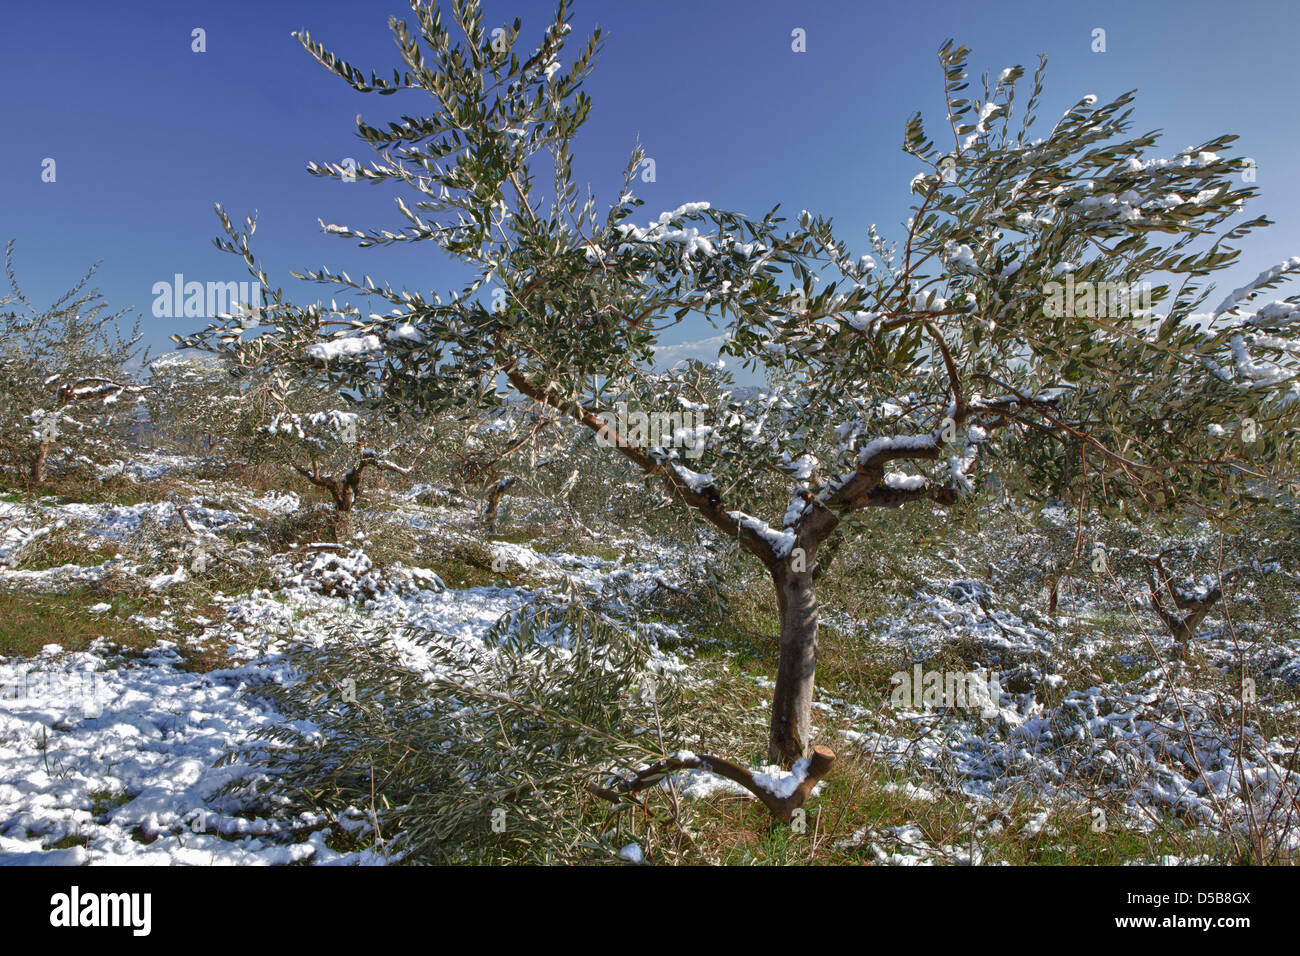 Luce neve coperta di ulivi in un frutteto in Italia Foto Stock